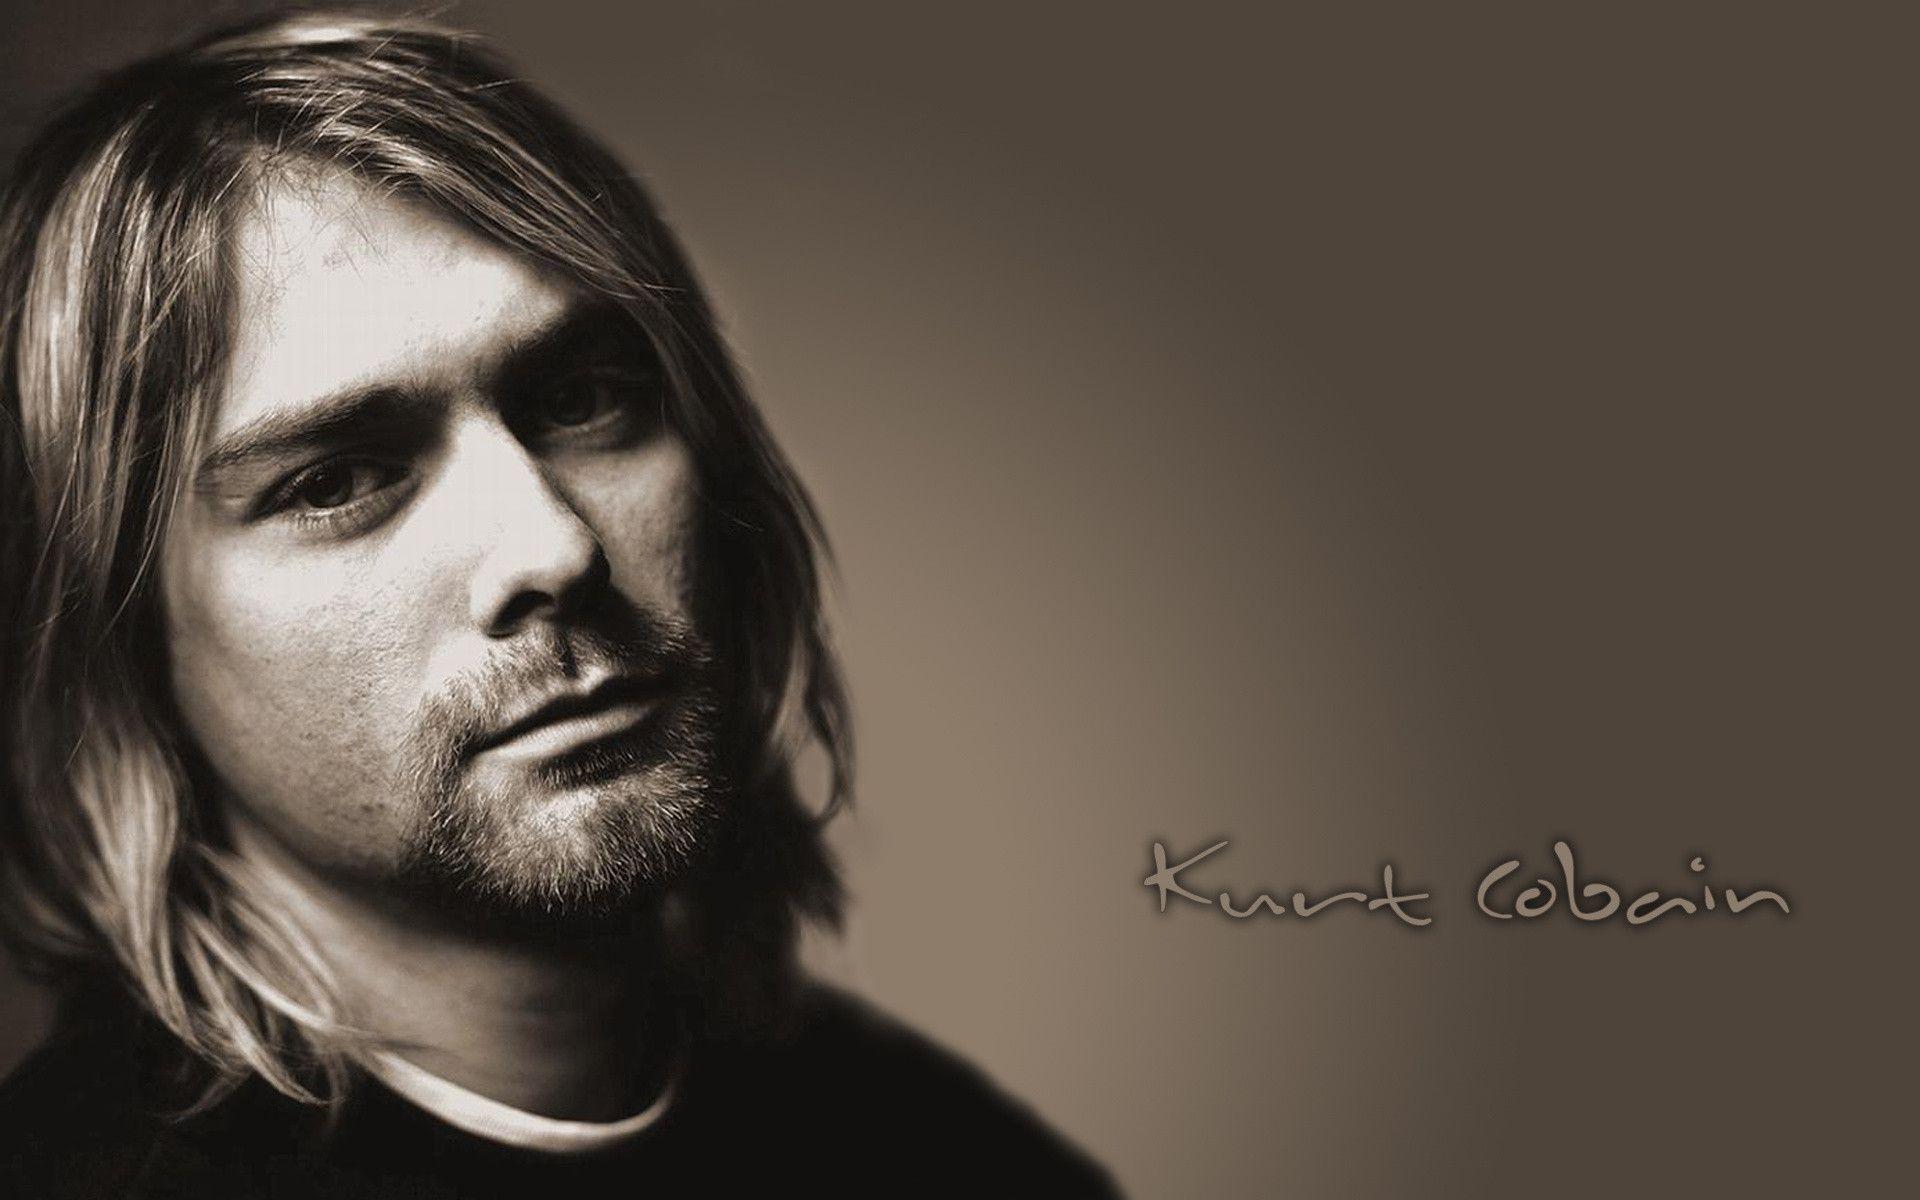 Kurt Cobain Wallpaper HD wallpaper search